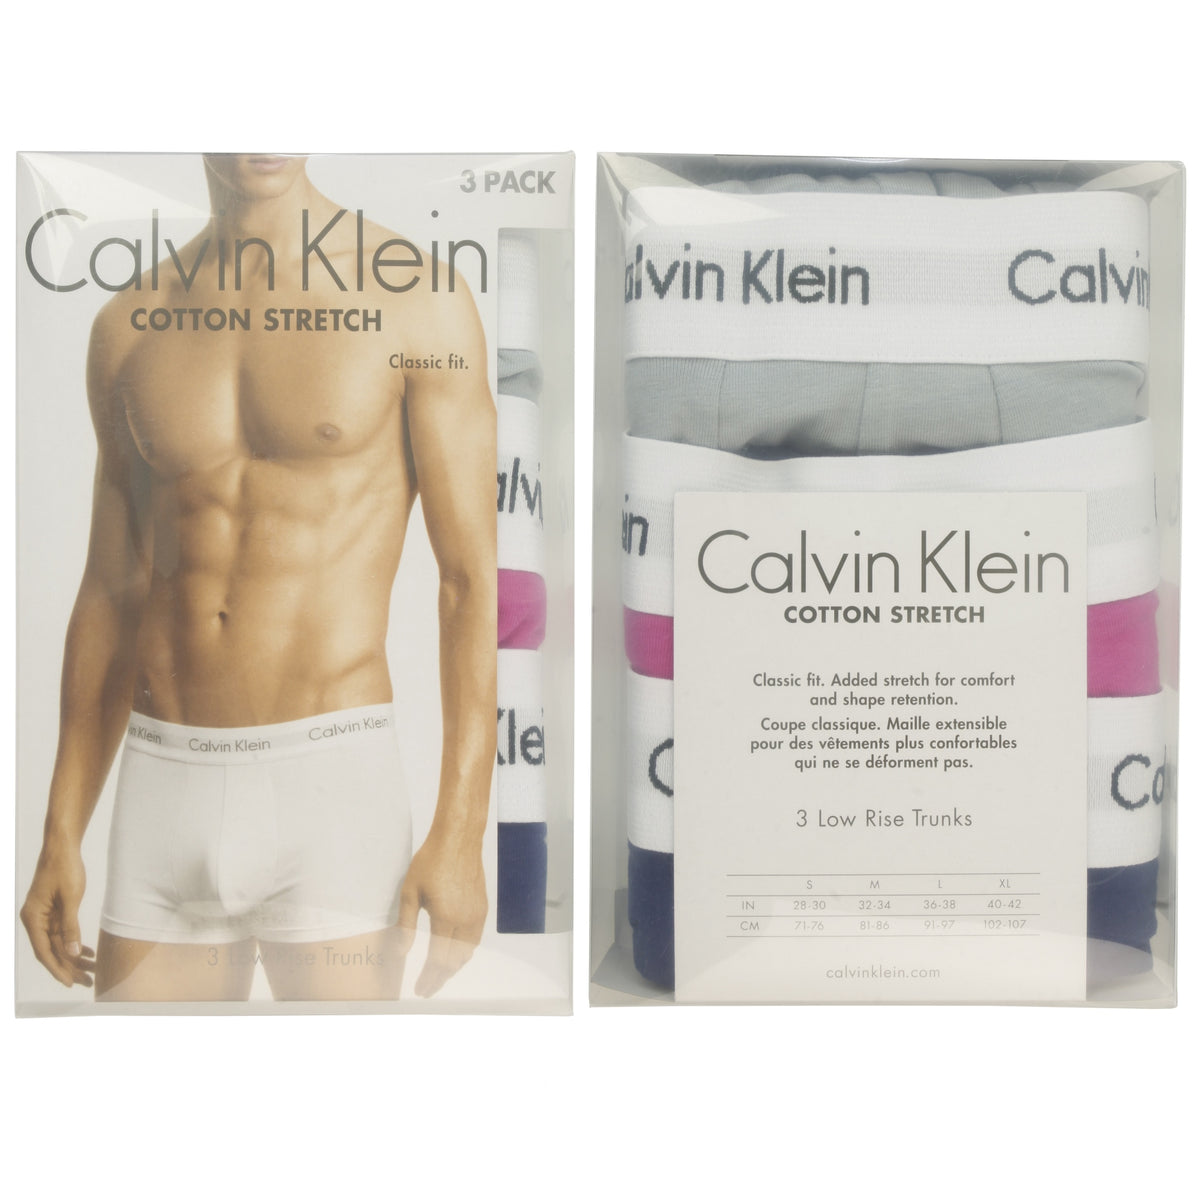 Mens Calvin Klein Boxer Shorts Low Rise Trunks 3 Pack, 03, U2664G, Slv Sprgs, Pal Pk, Bl Dpts W/ Wh Wb